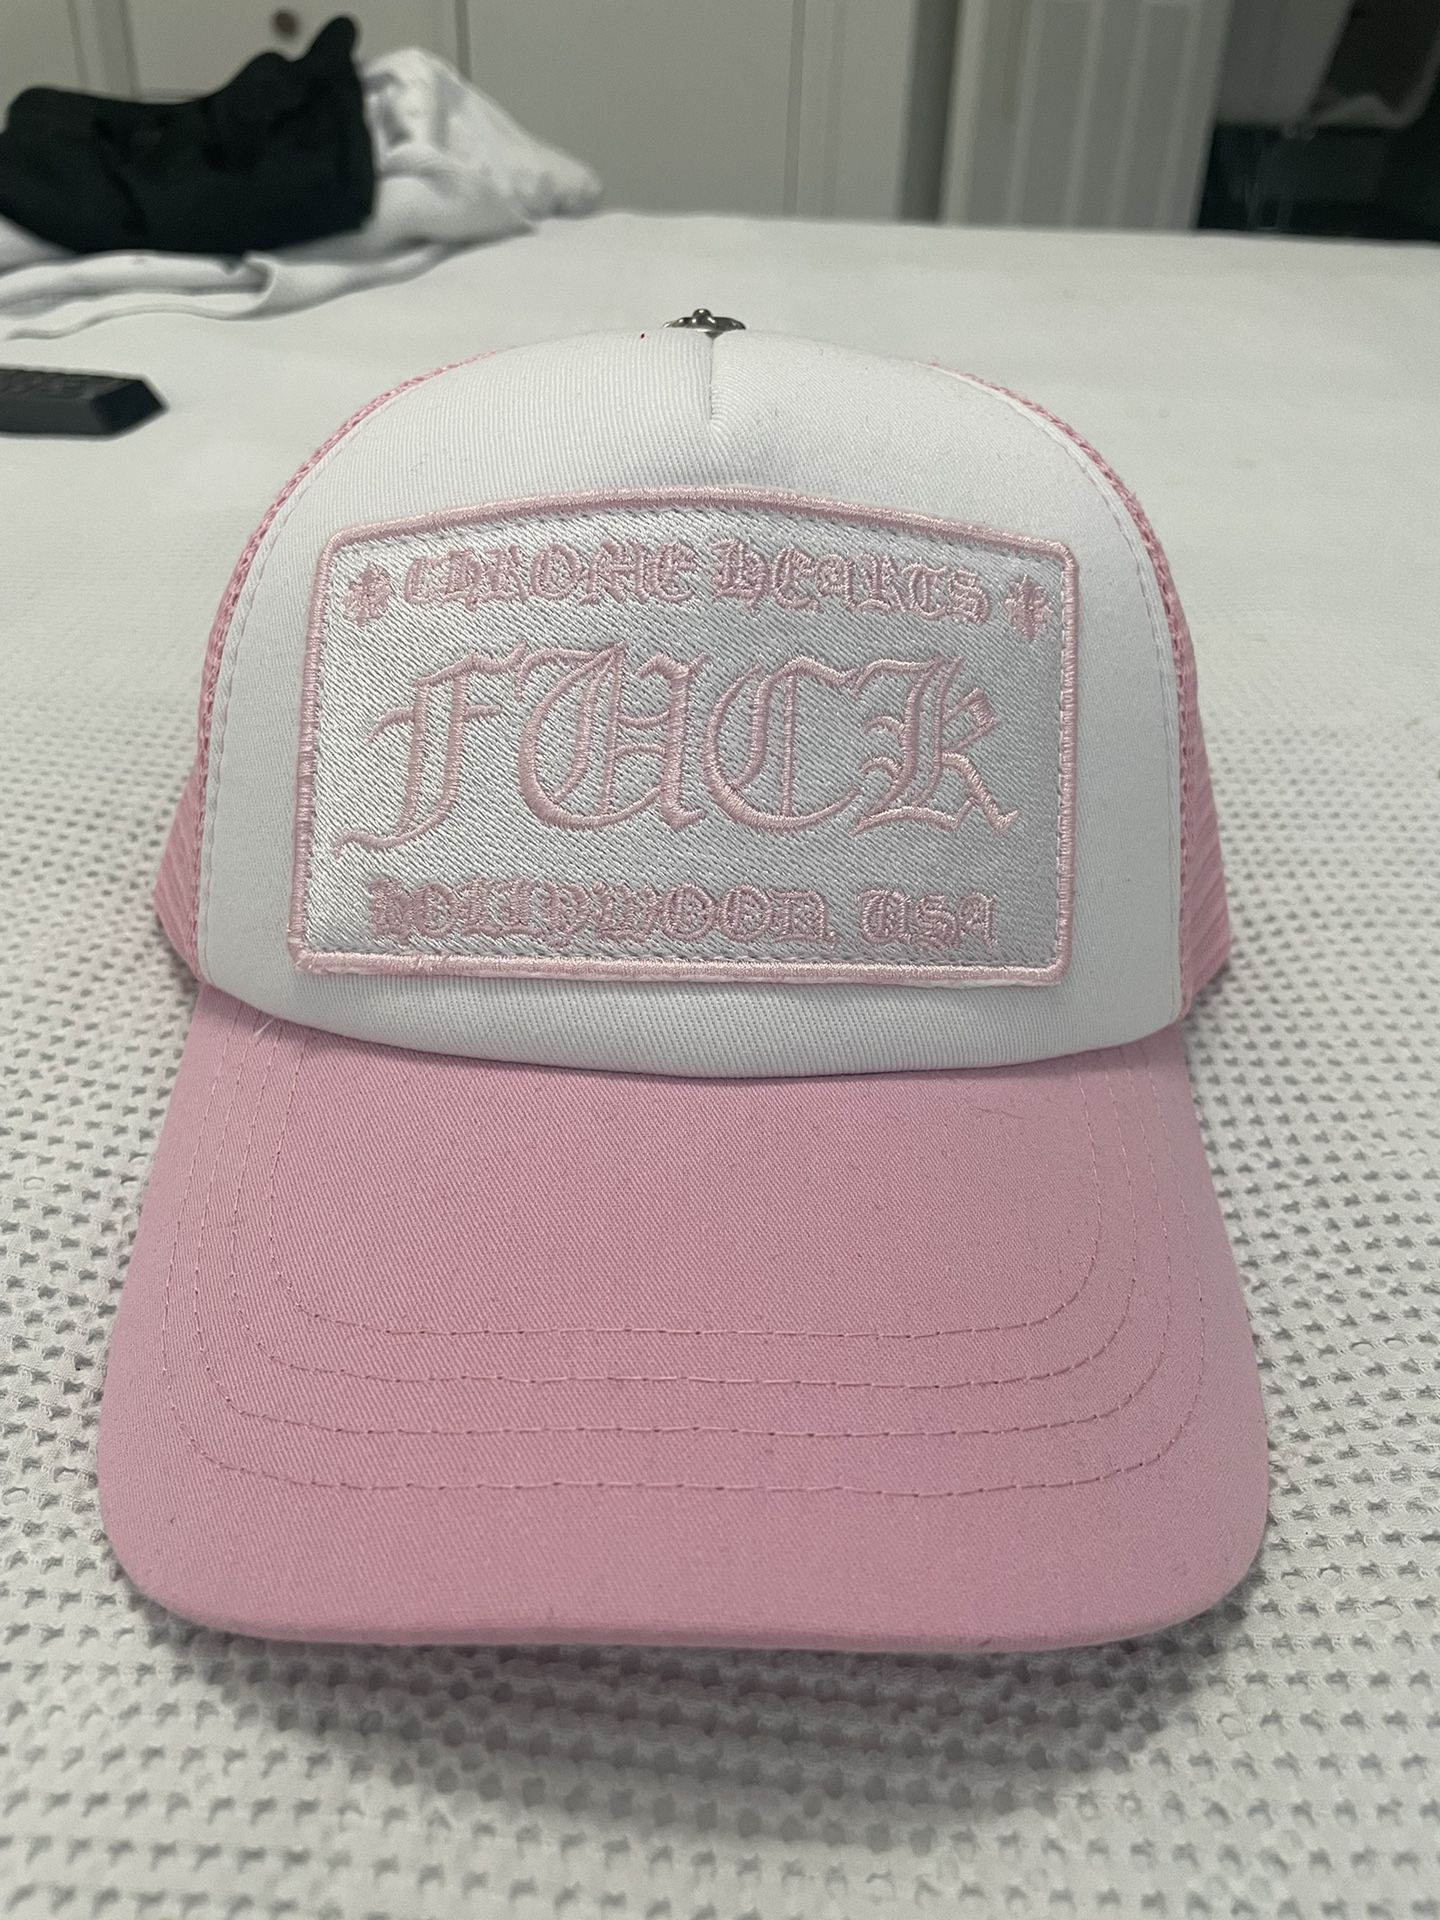 Chrome Hearts Pink Trucker Hat 